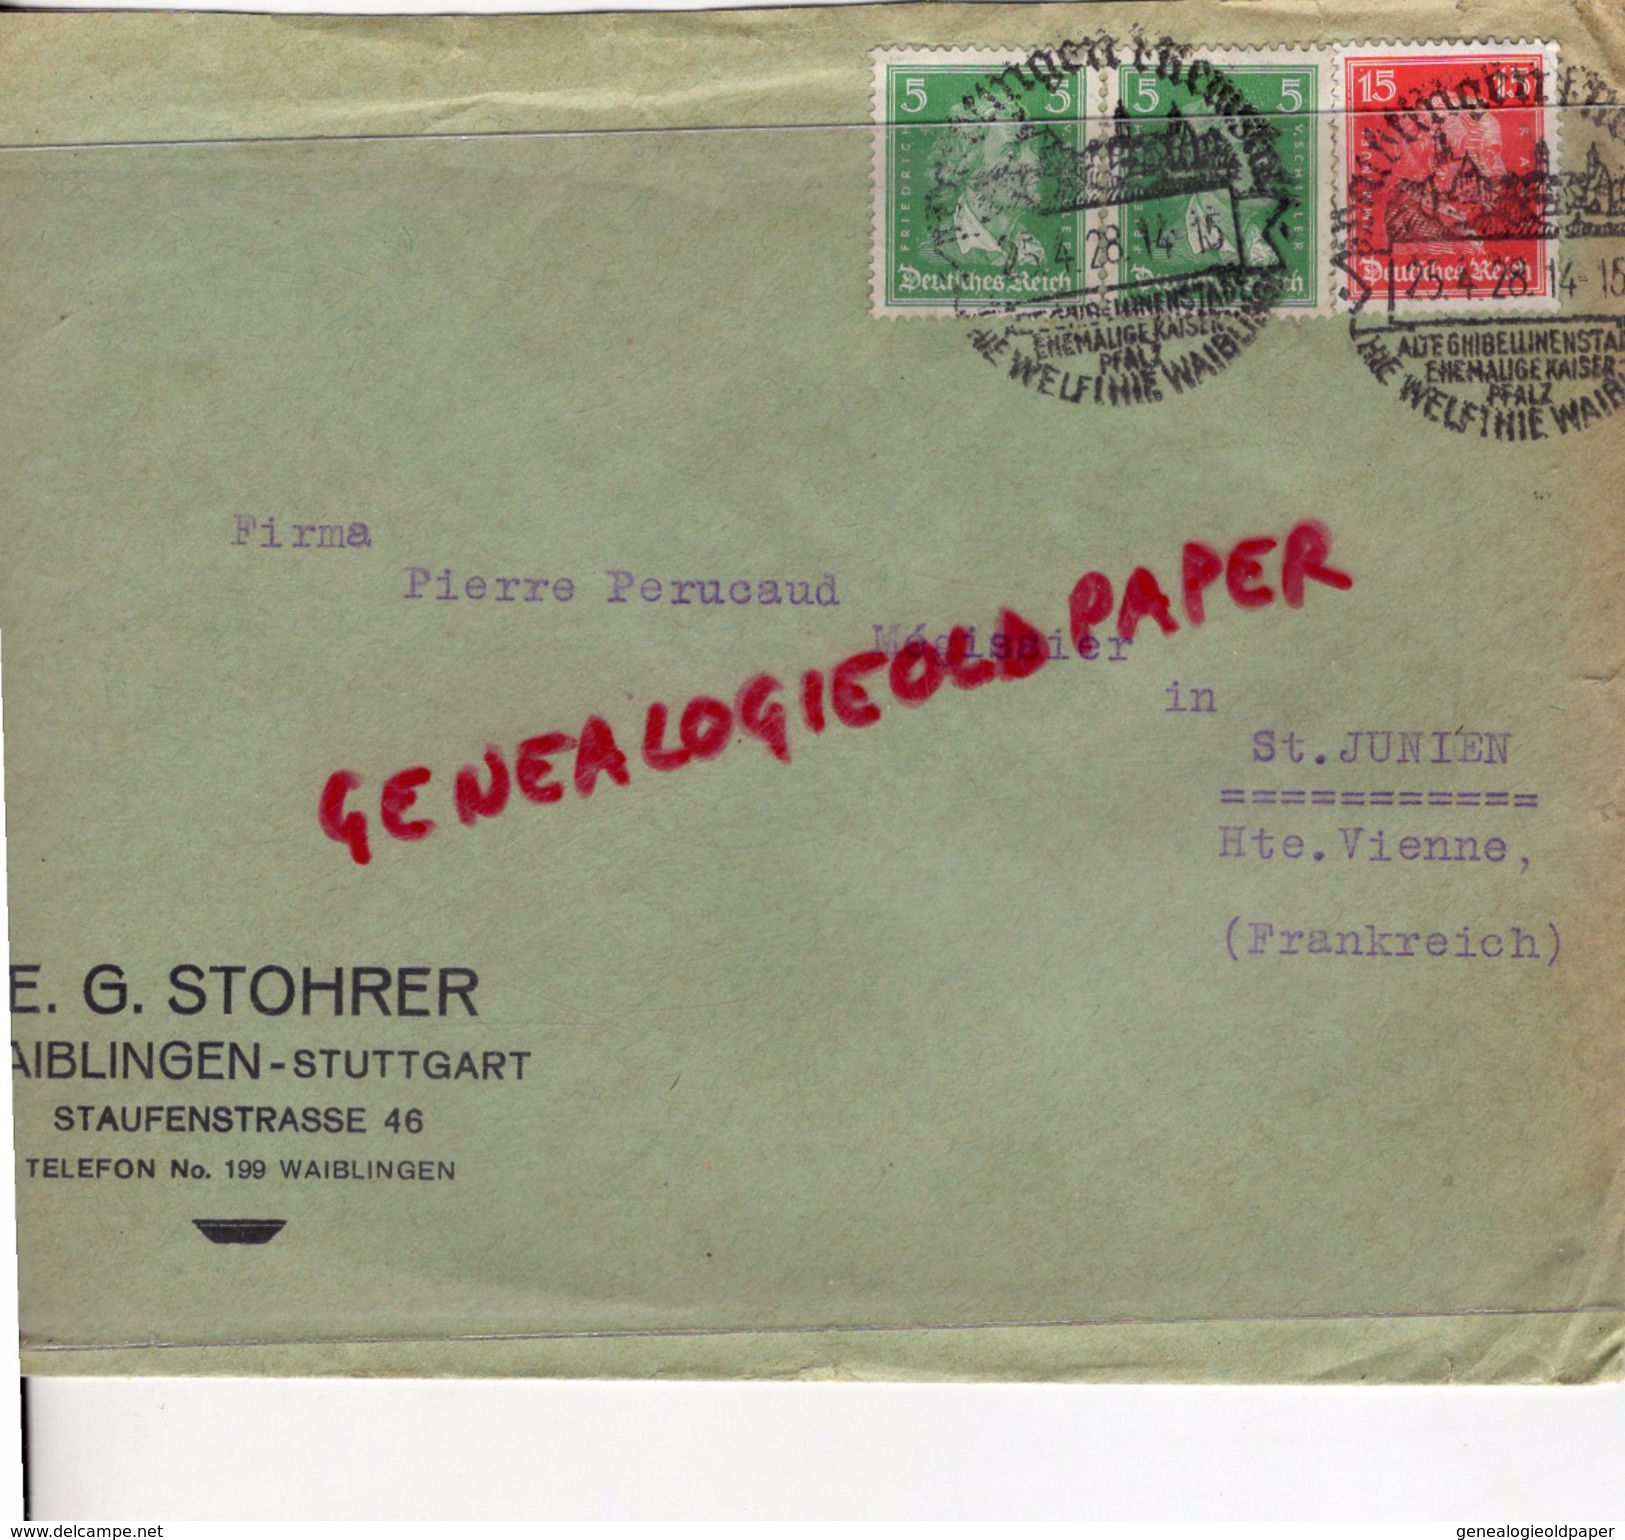 ALLEMAGNE-AIBLINGEN-STUTTGART-E.G. STOHRER-STAUFENSTRASSE 46-A PIERRE PERUCAUD 1928 MEGISSERIE ST SAINT JUNIEN - 1900 – 1949